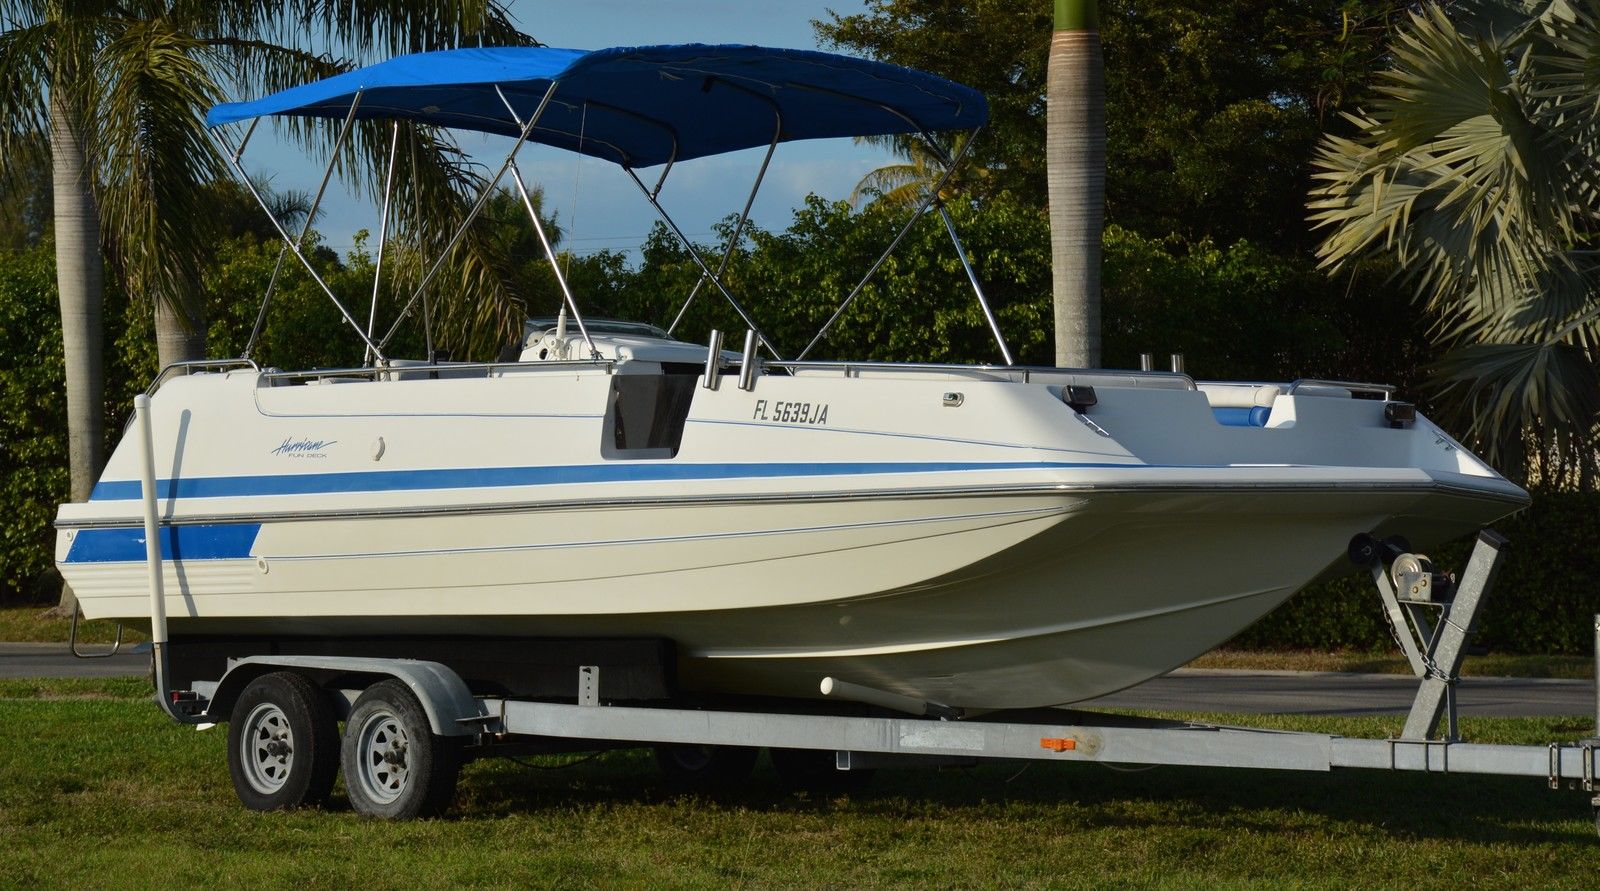 Hurricane 246 Boat For Sale - Waa2